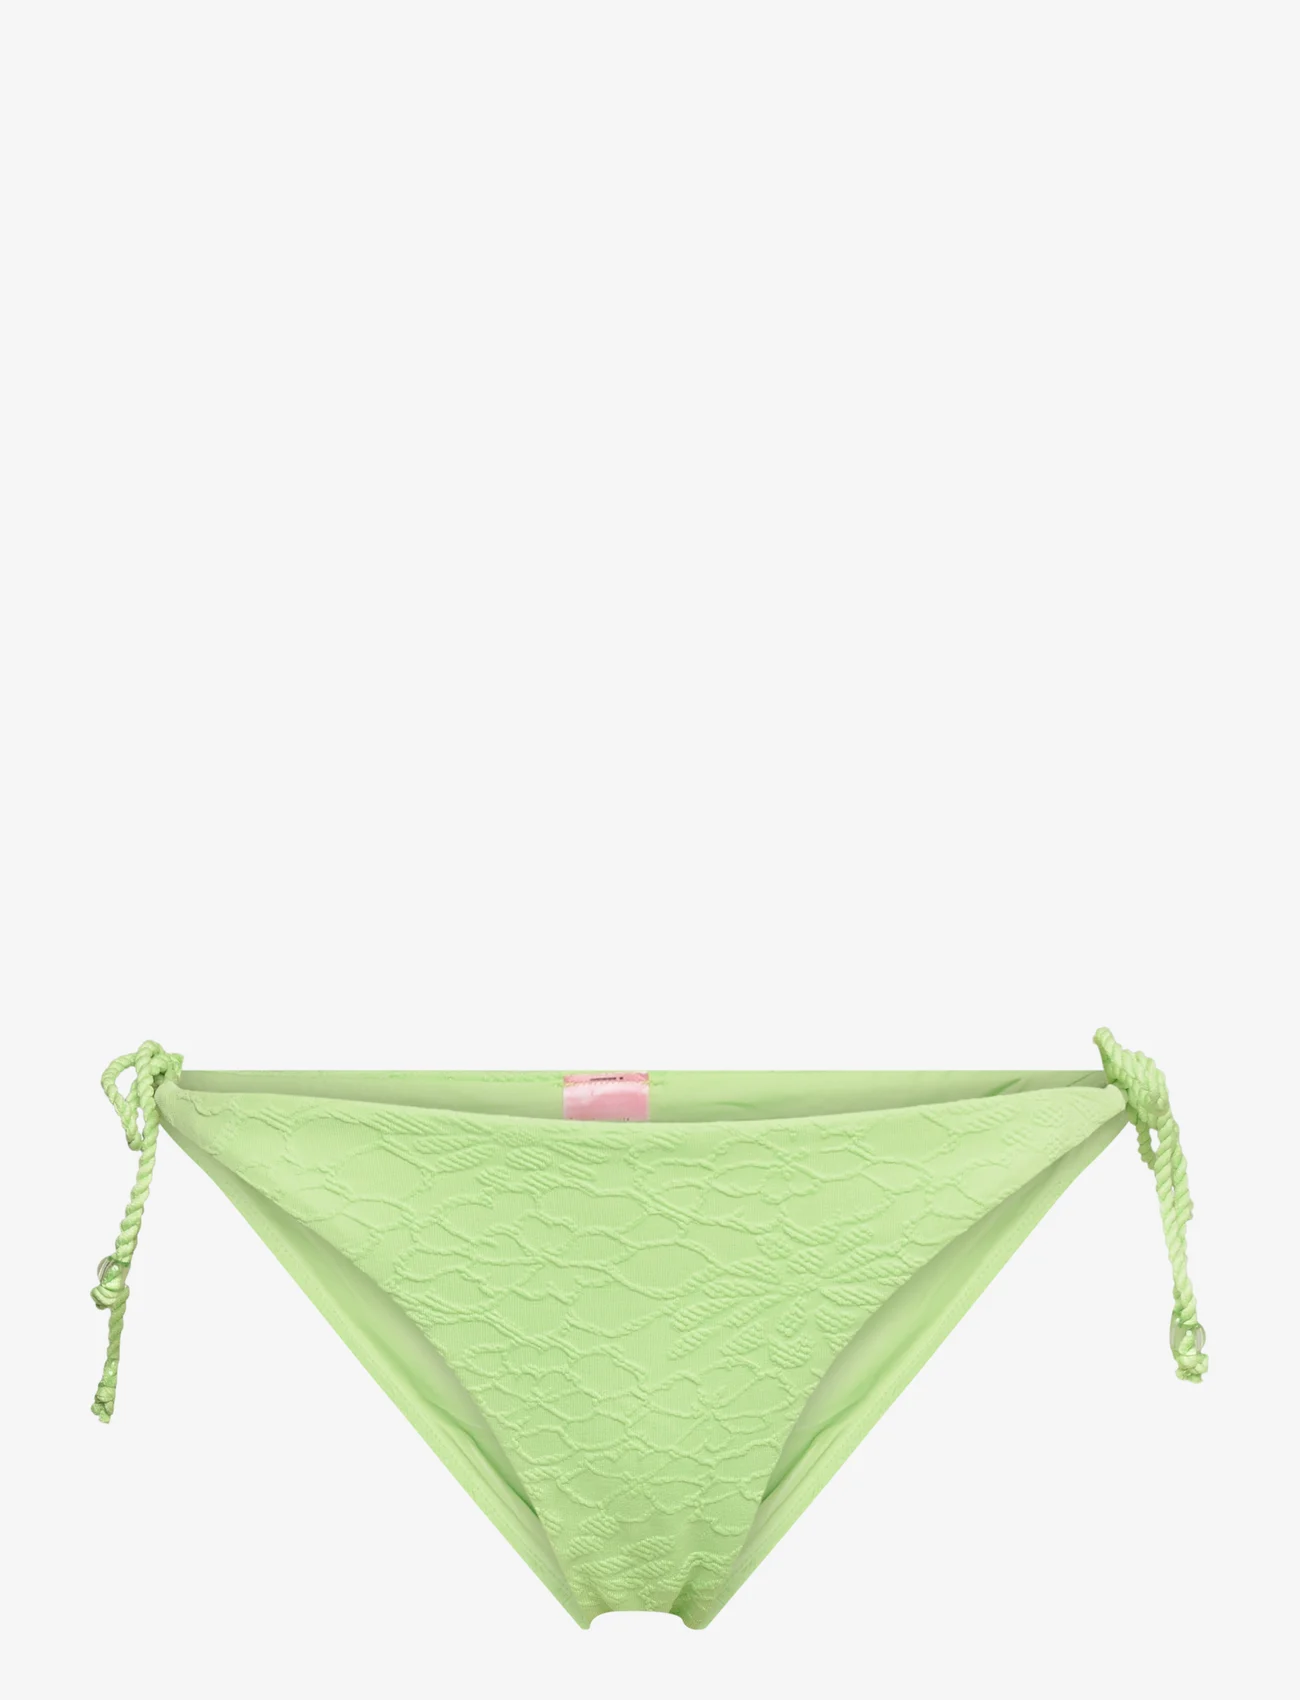 Hunkemöller - Bondi cheeky t - bikini ar sānu aukliņām - paradise green - 0